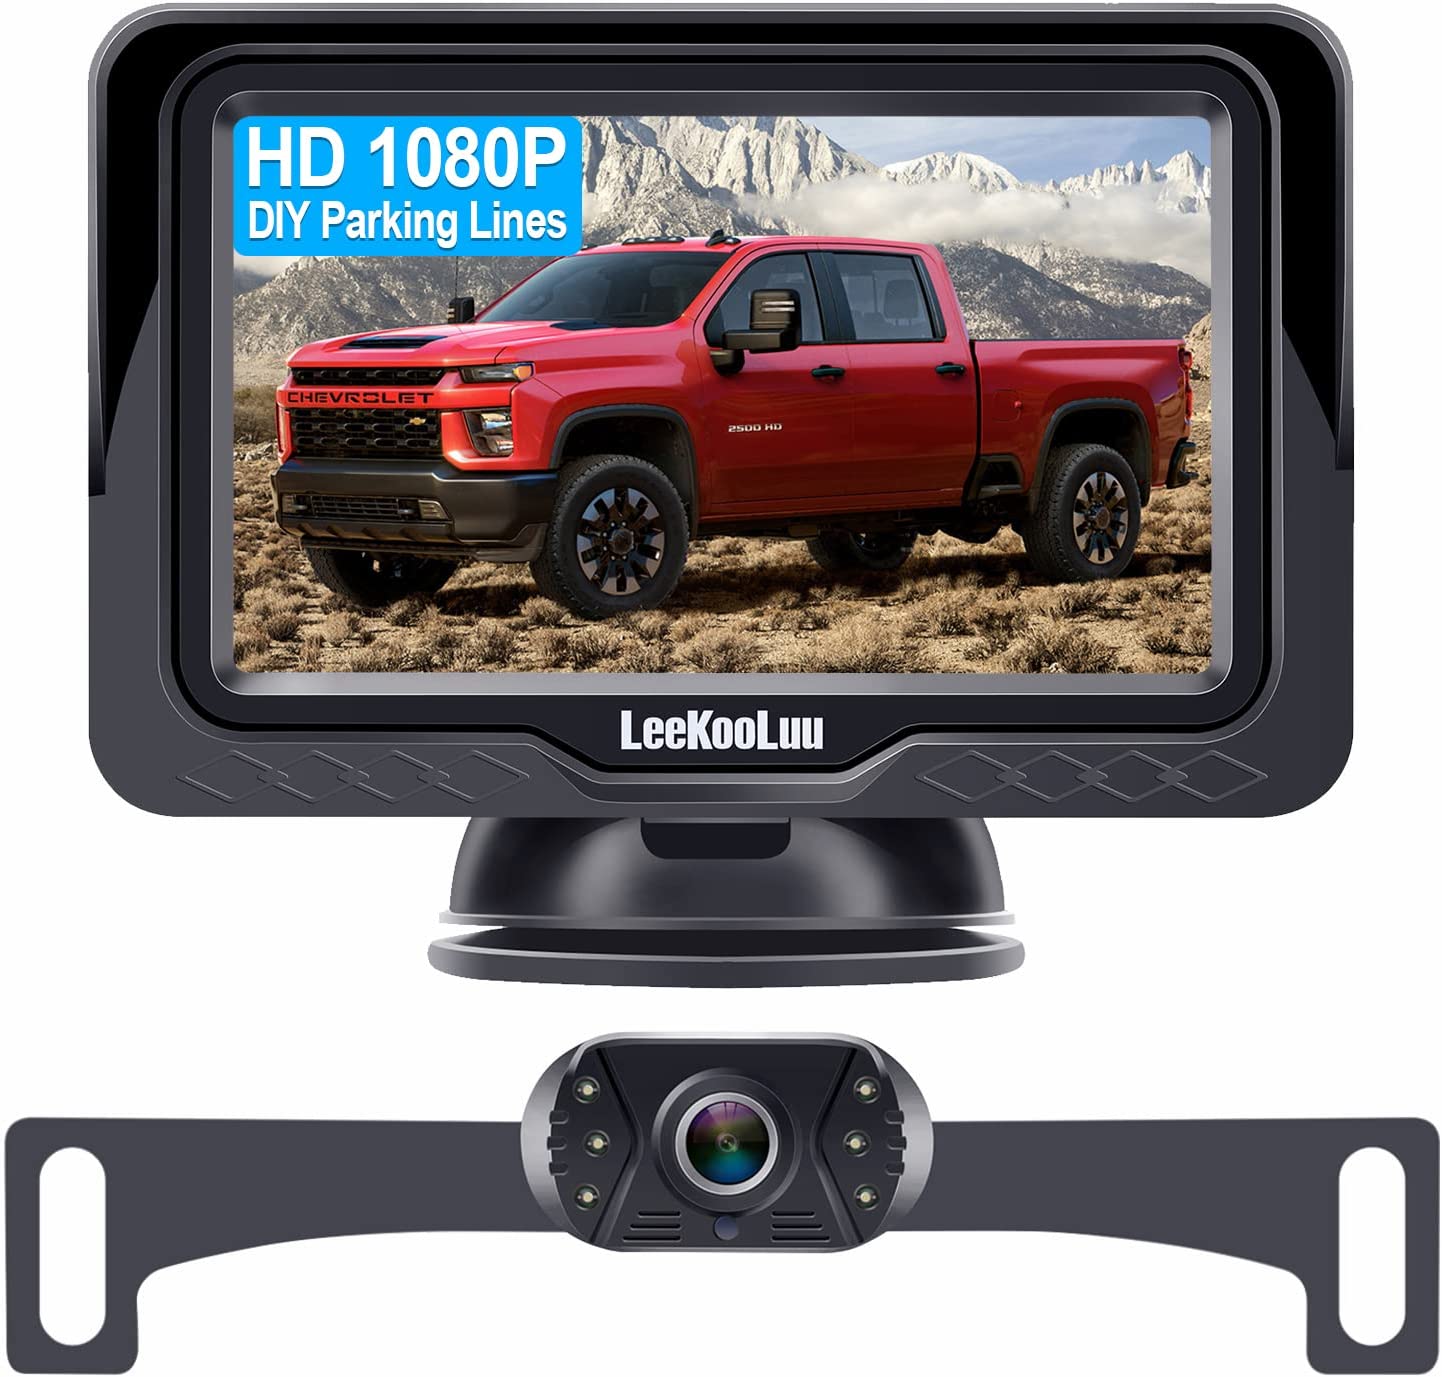 Waterproof Night Vision Backup Camera Rear View Monitor Kit HD 1080P for Car Truck Minivan - Smart Tech Shopping